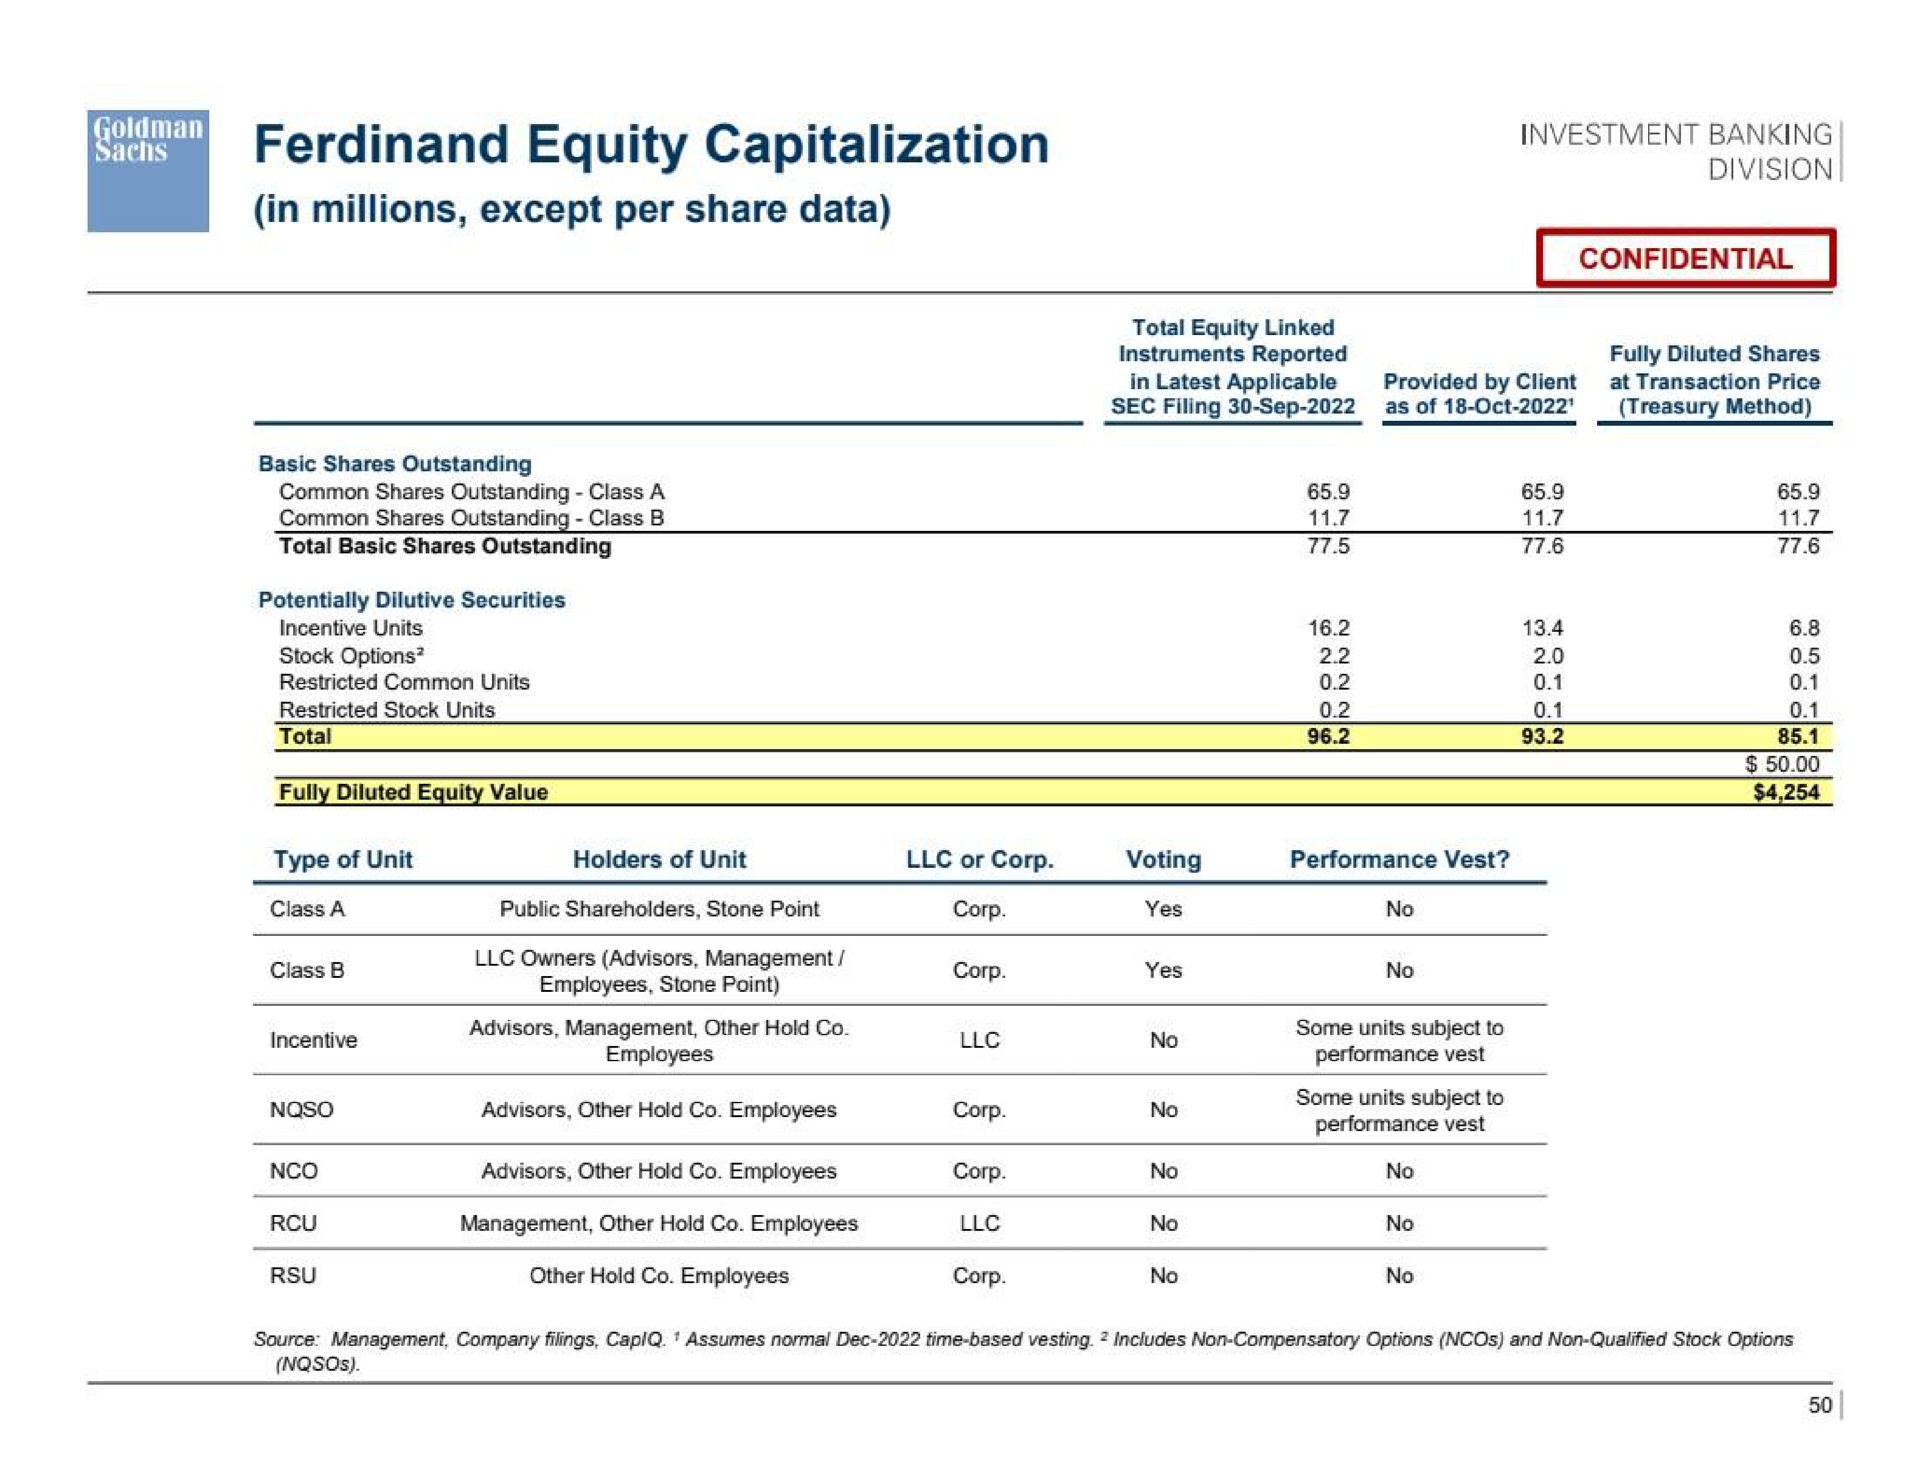 equity capitalization | Goldman Sachs